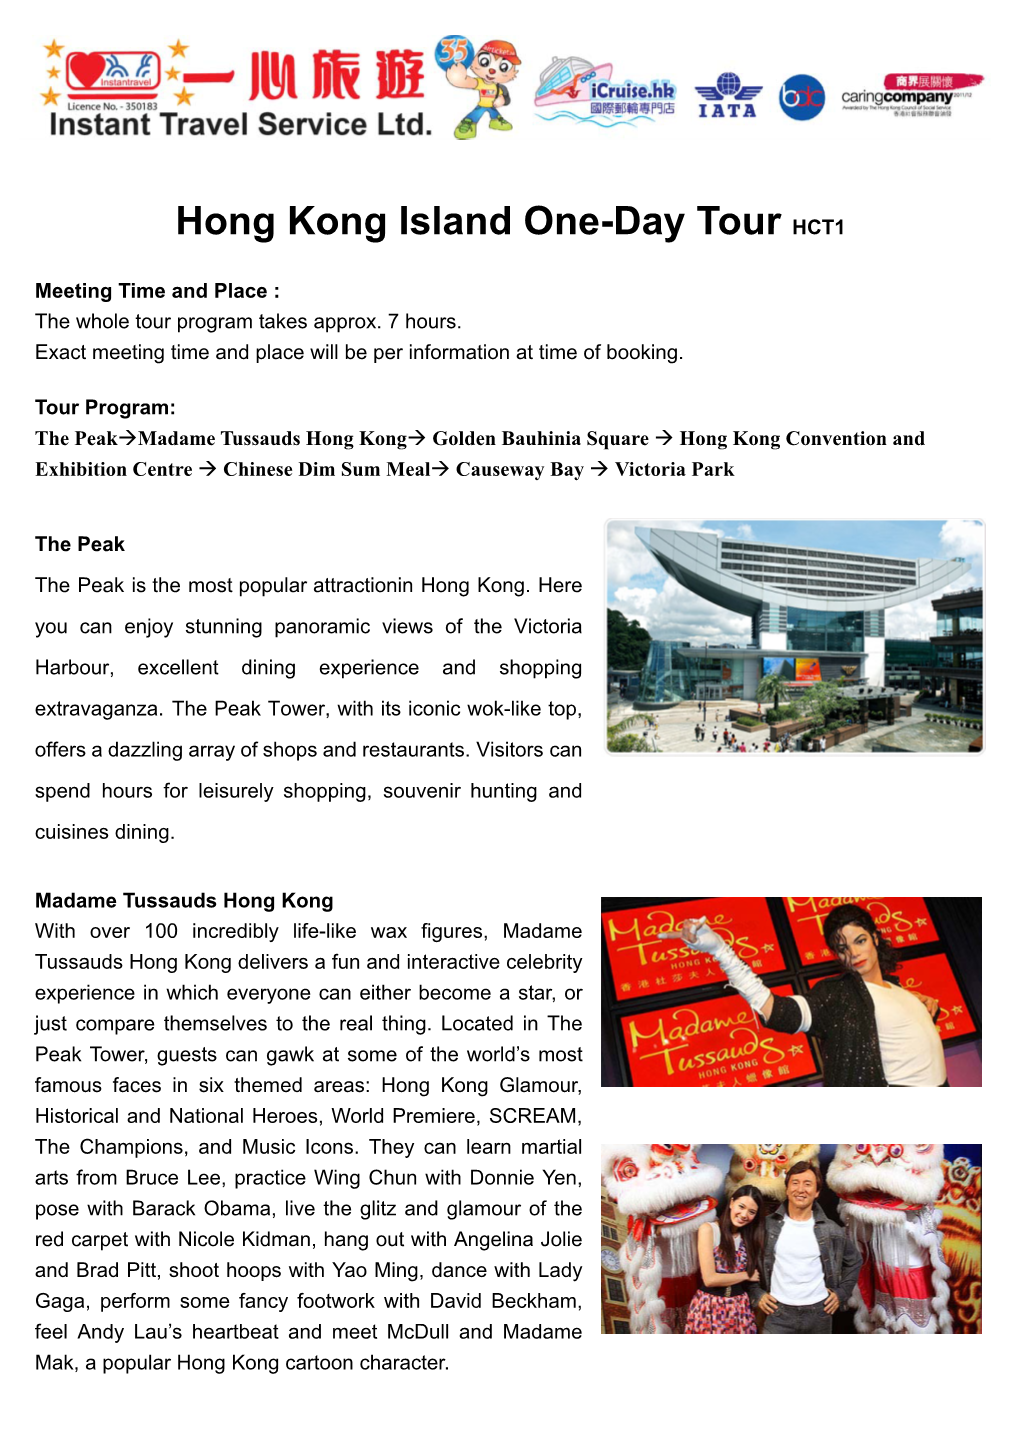 Hong Kong Island One-Day Tour HCT1